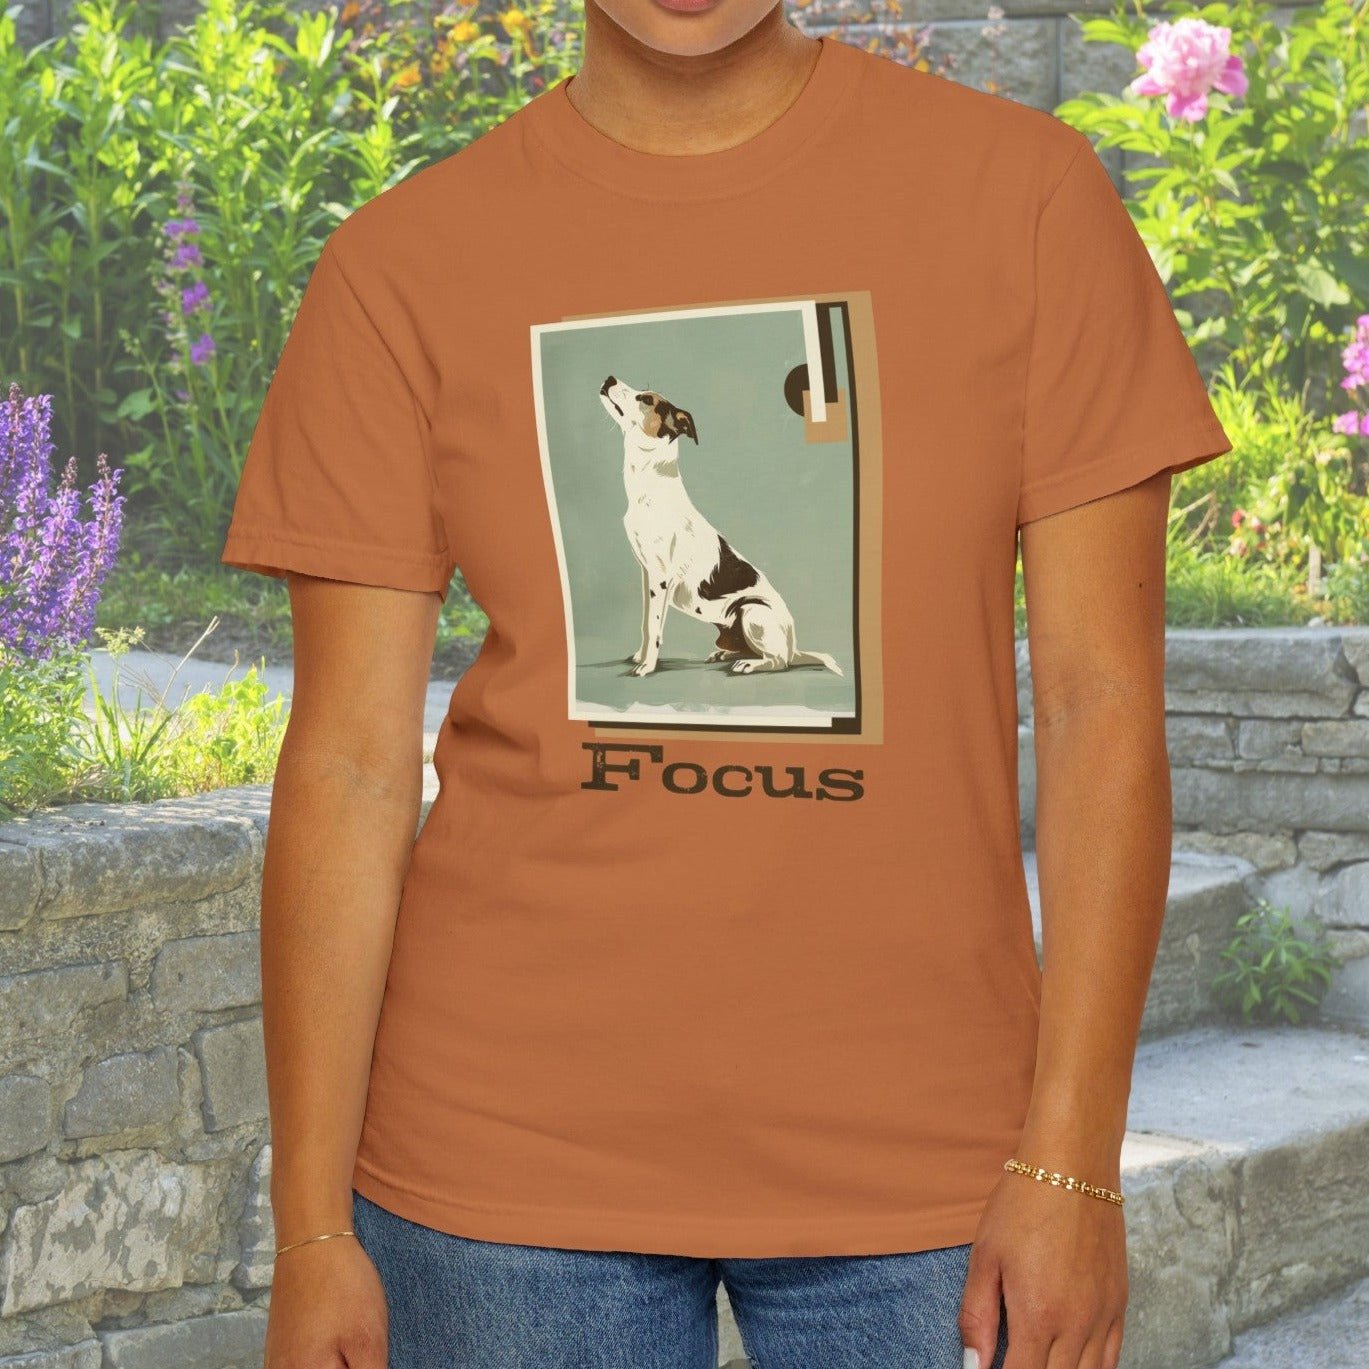 Dog T - shirt, Art Deco Poster Illustration Of Dog Shirt, Perfect for Art and Dog Lovers - FlooredByArt